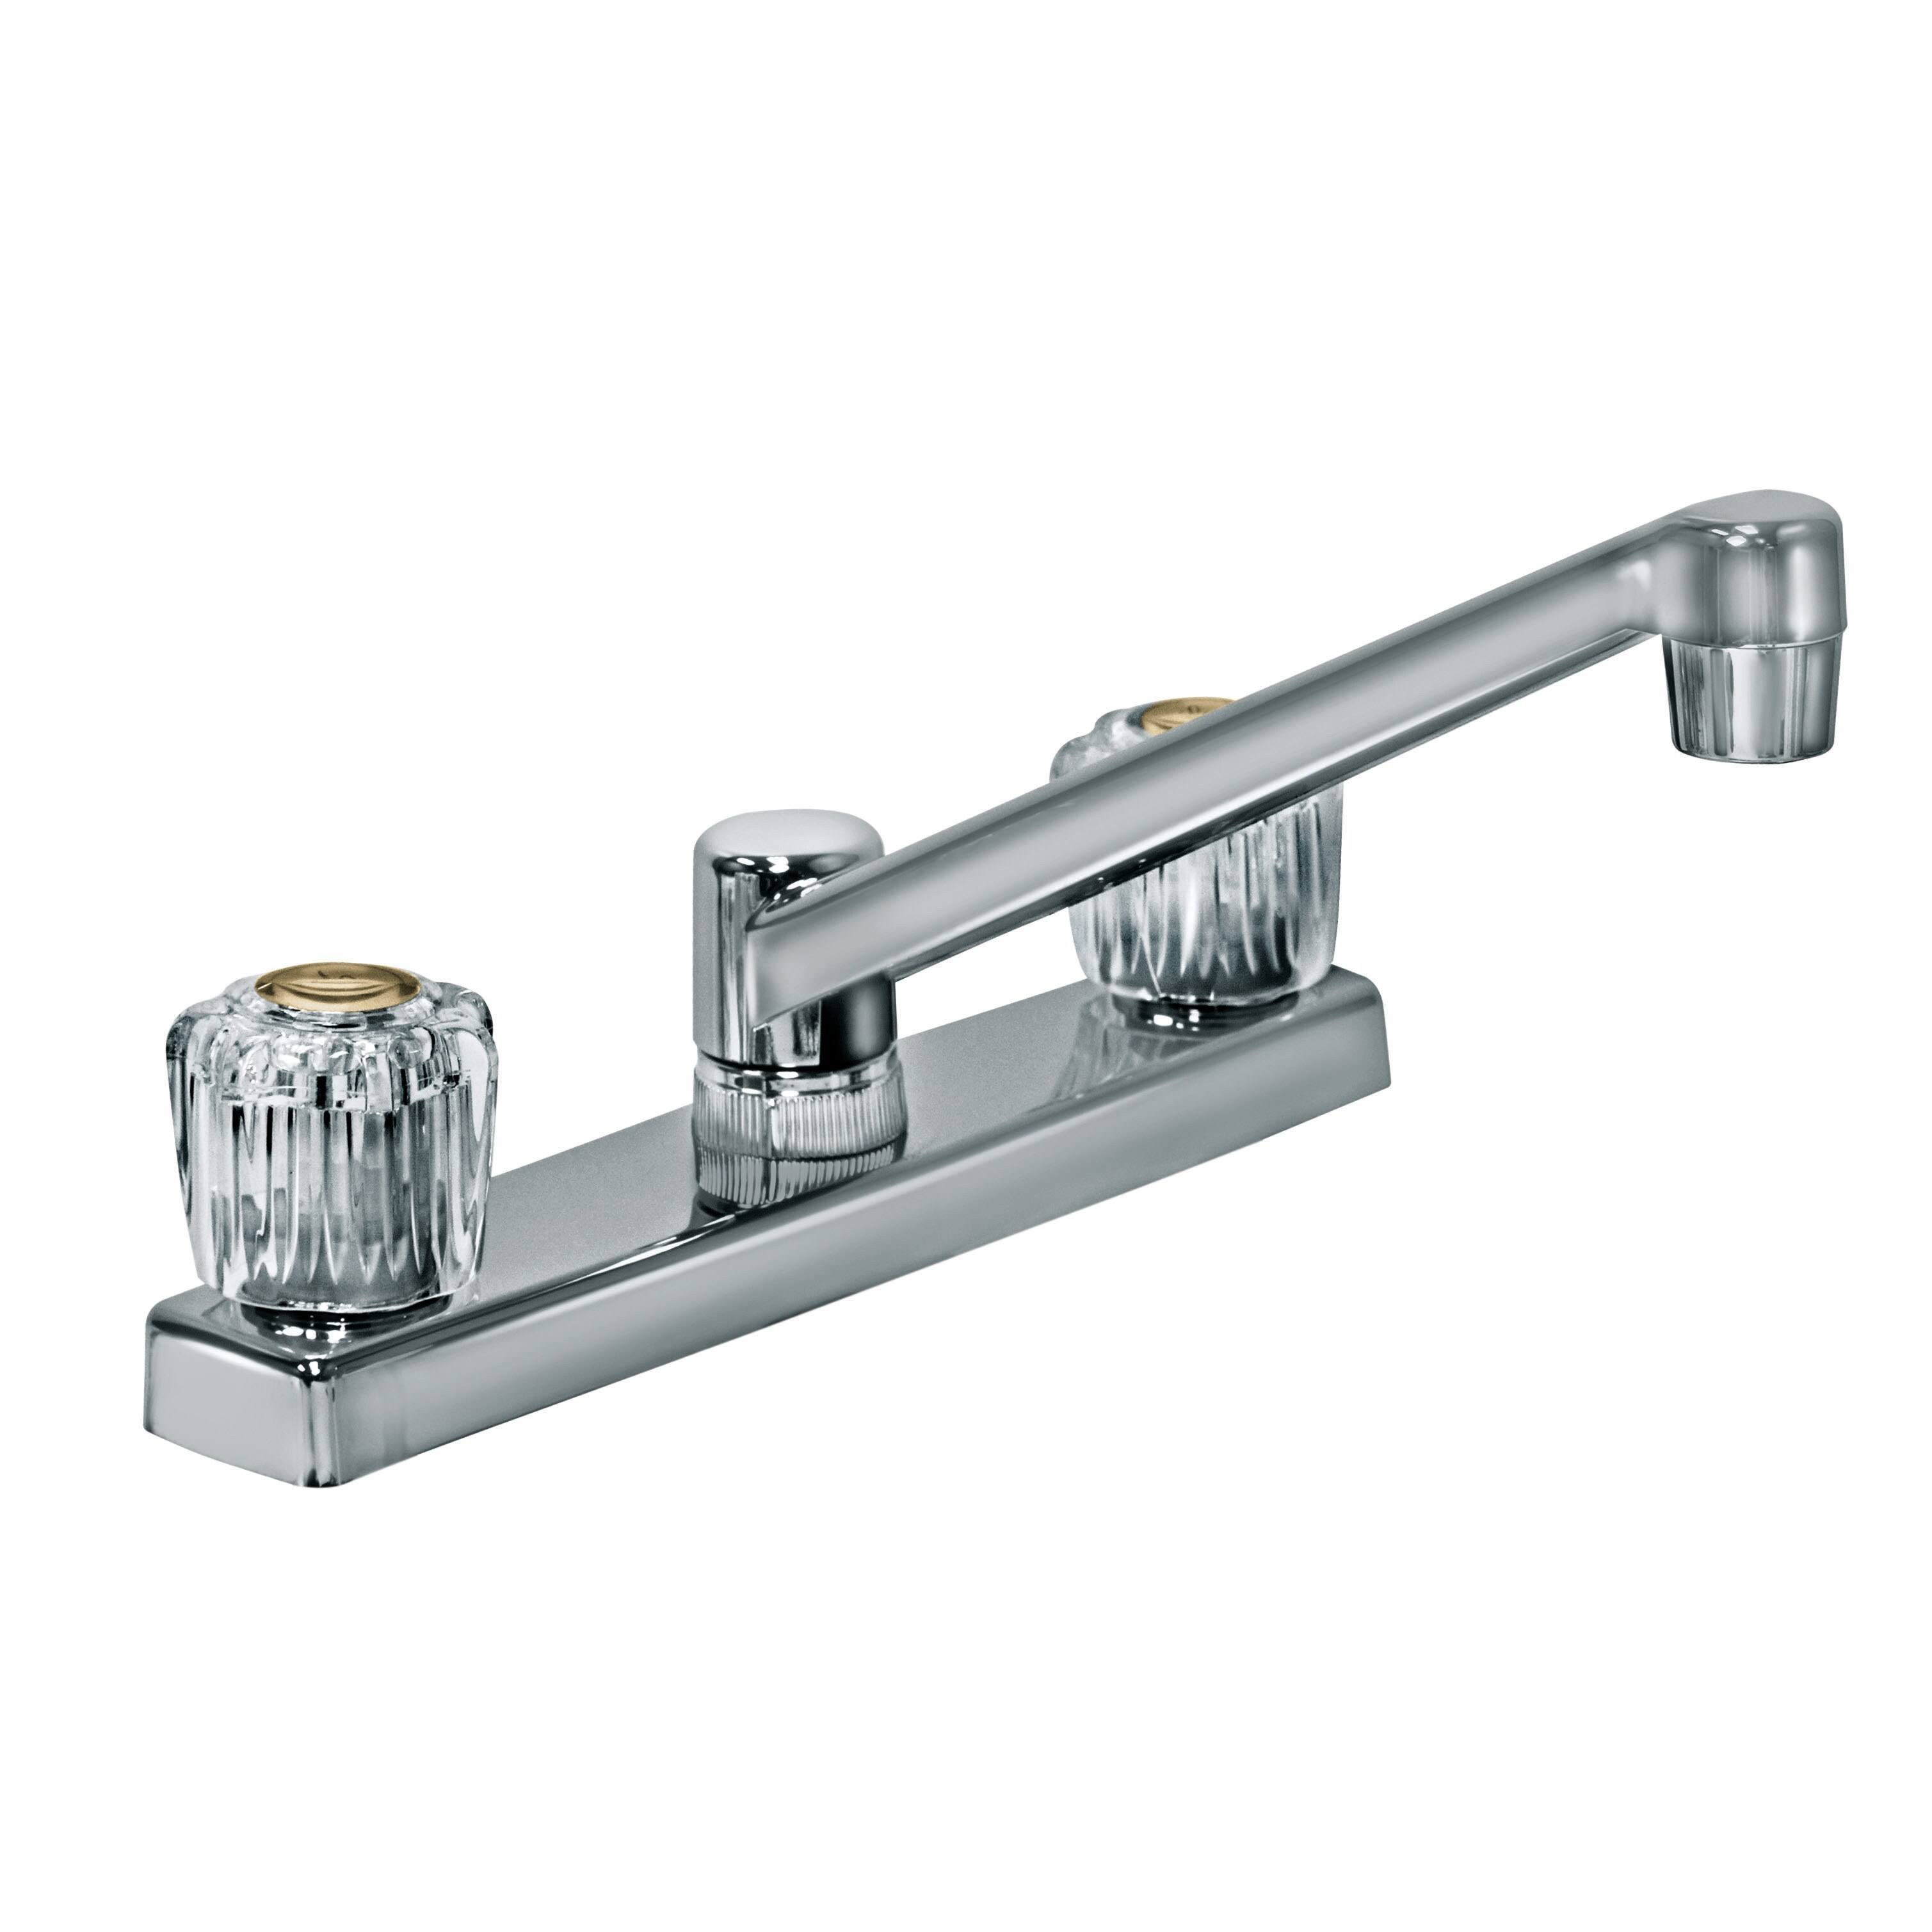 Aqua Plumb 1551010 2 Handle Kitchen Faucet - Polished Chrome, 8"